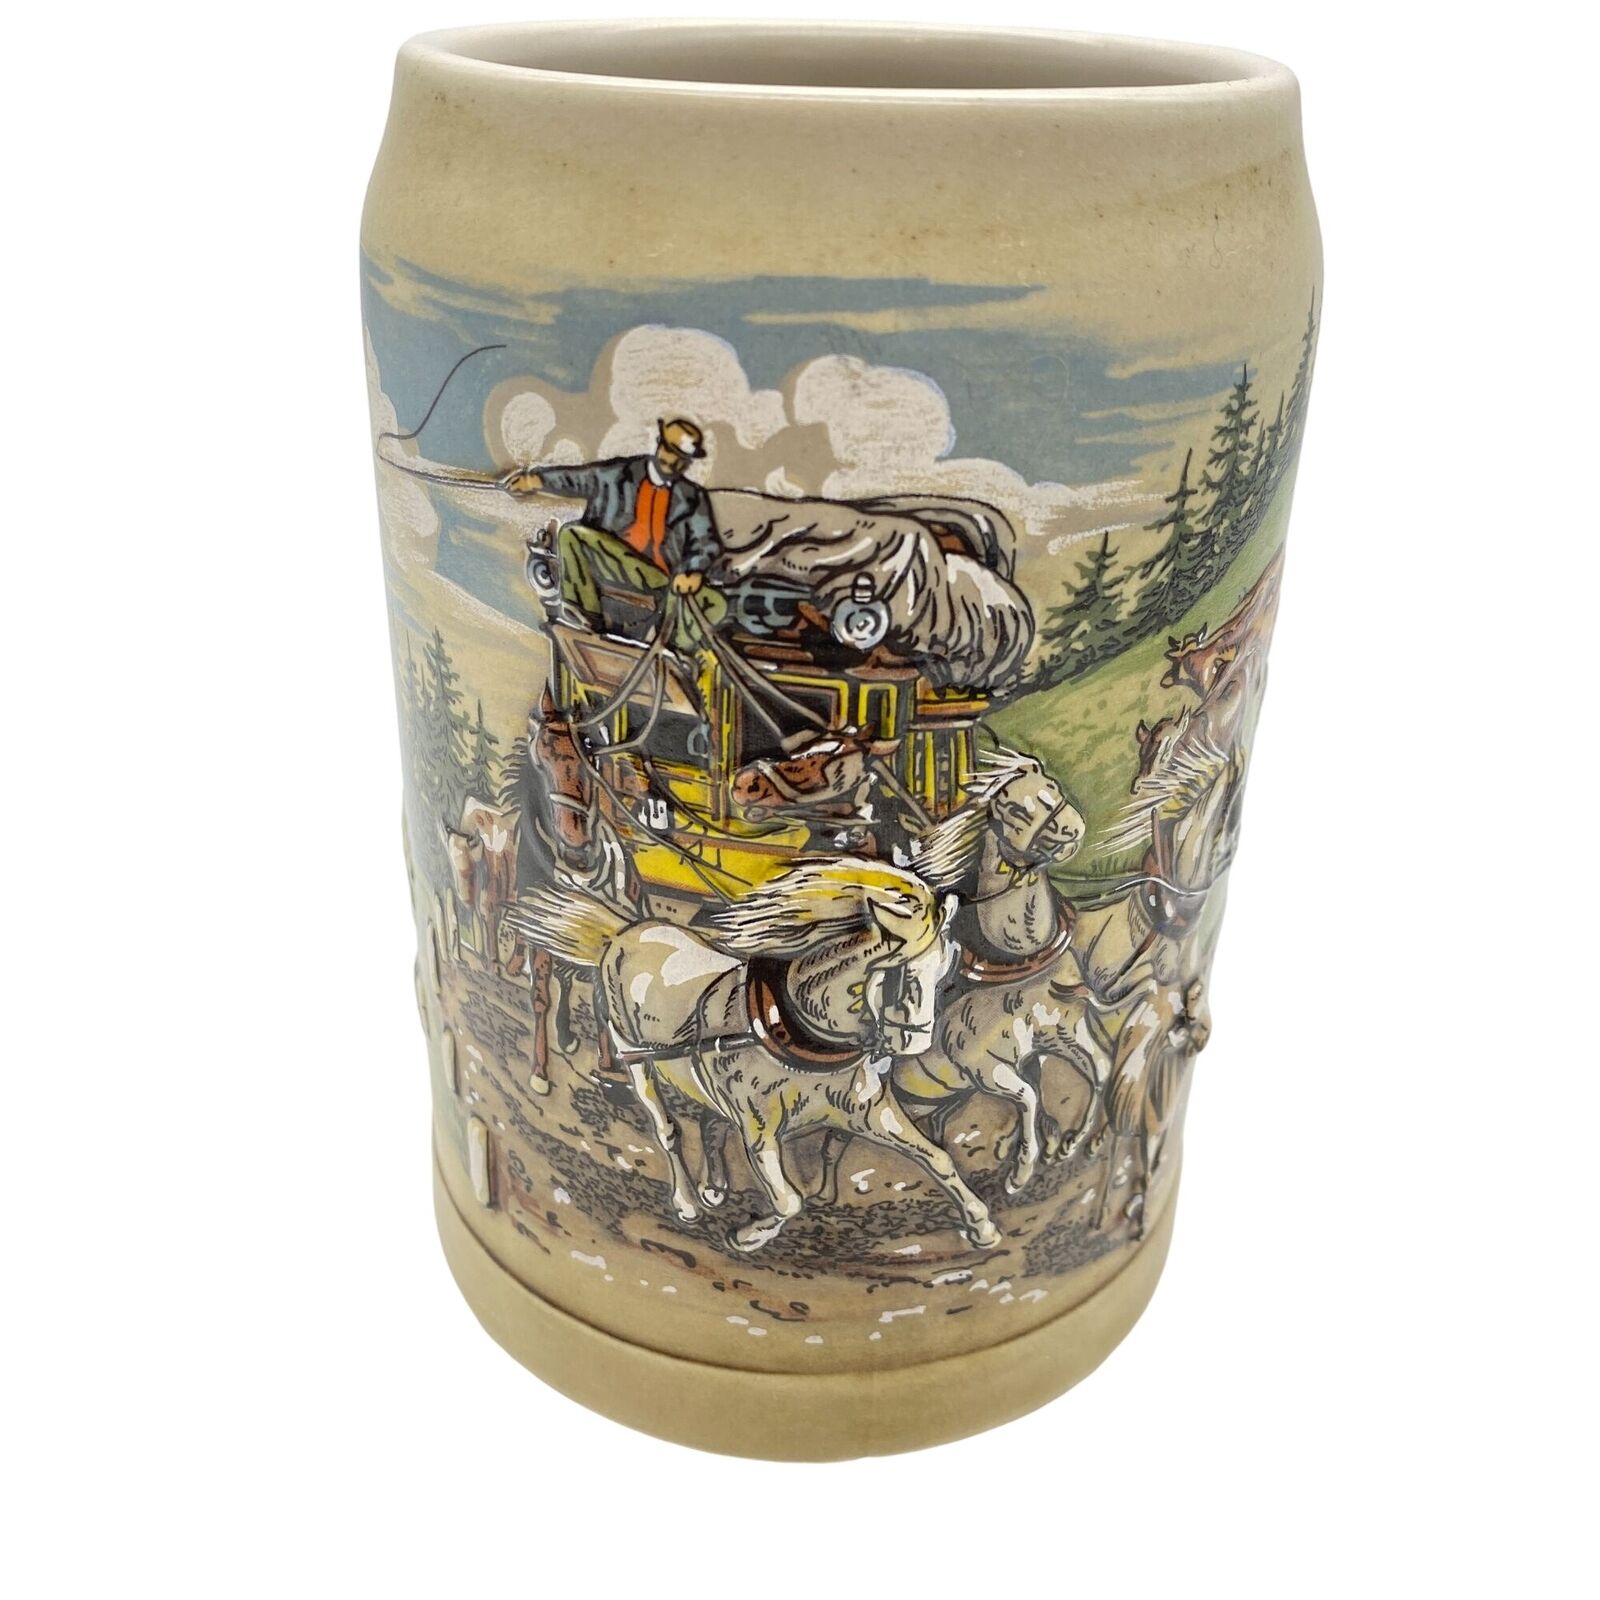 VTG German Beer stein mug tankard 3D image Stage coach horses western theme